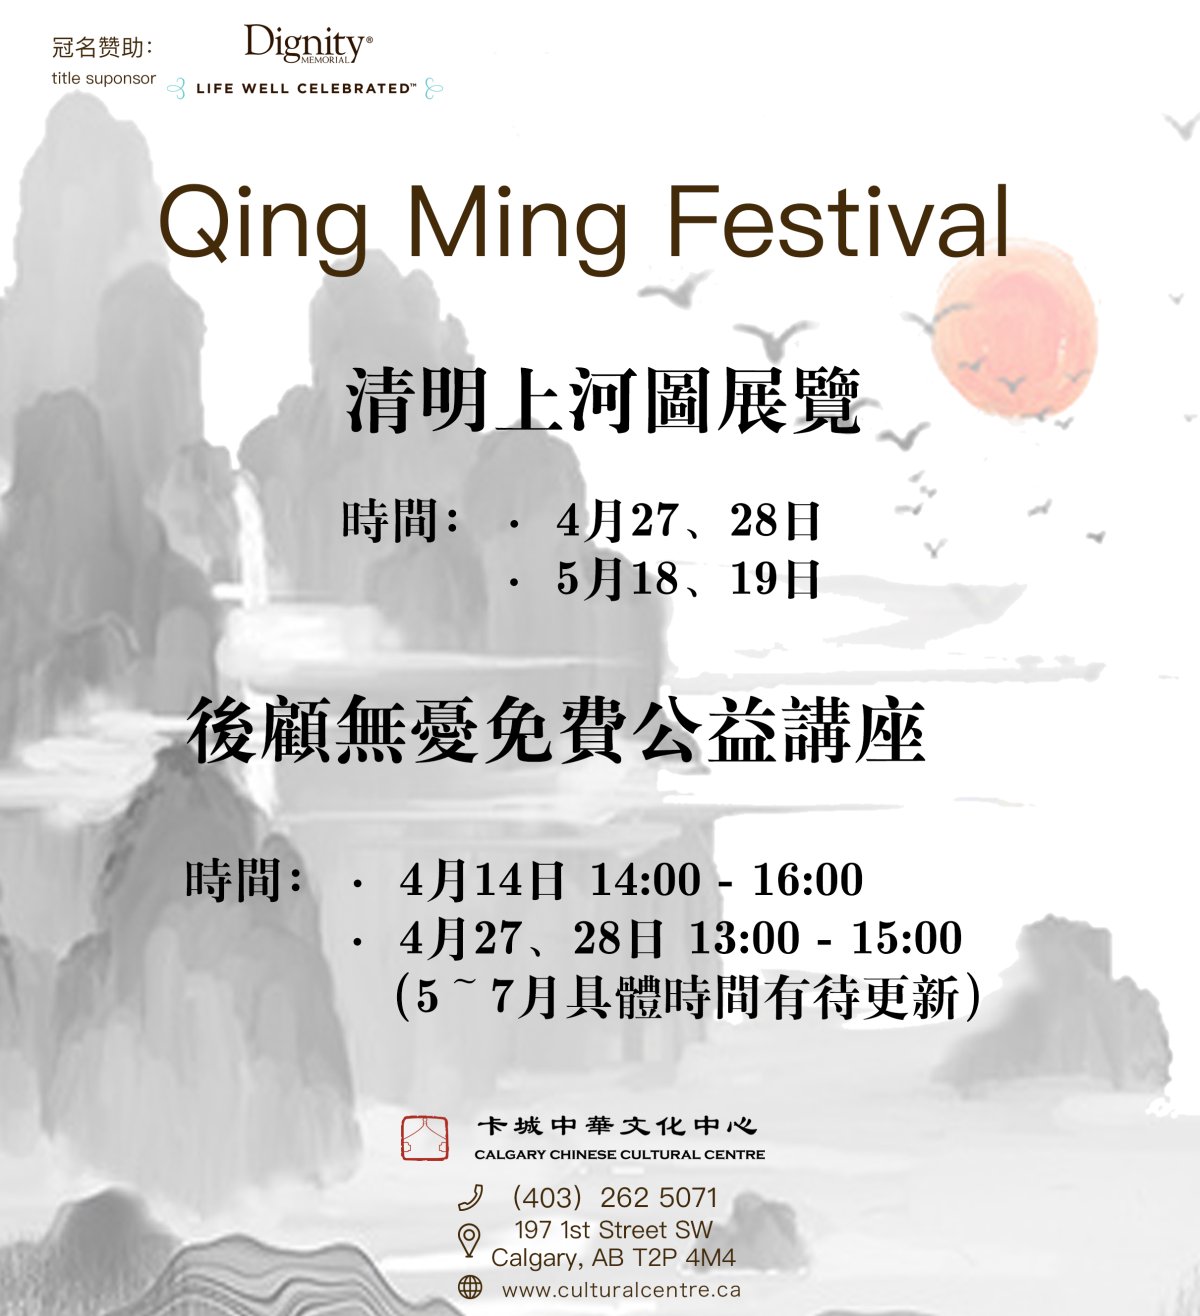 Qing Ming Festival - image